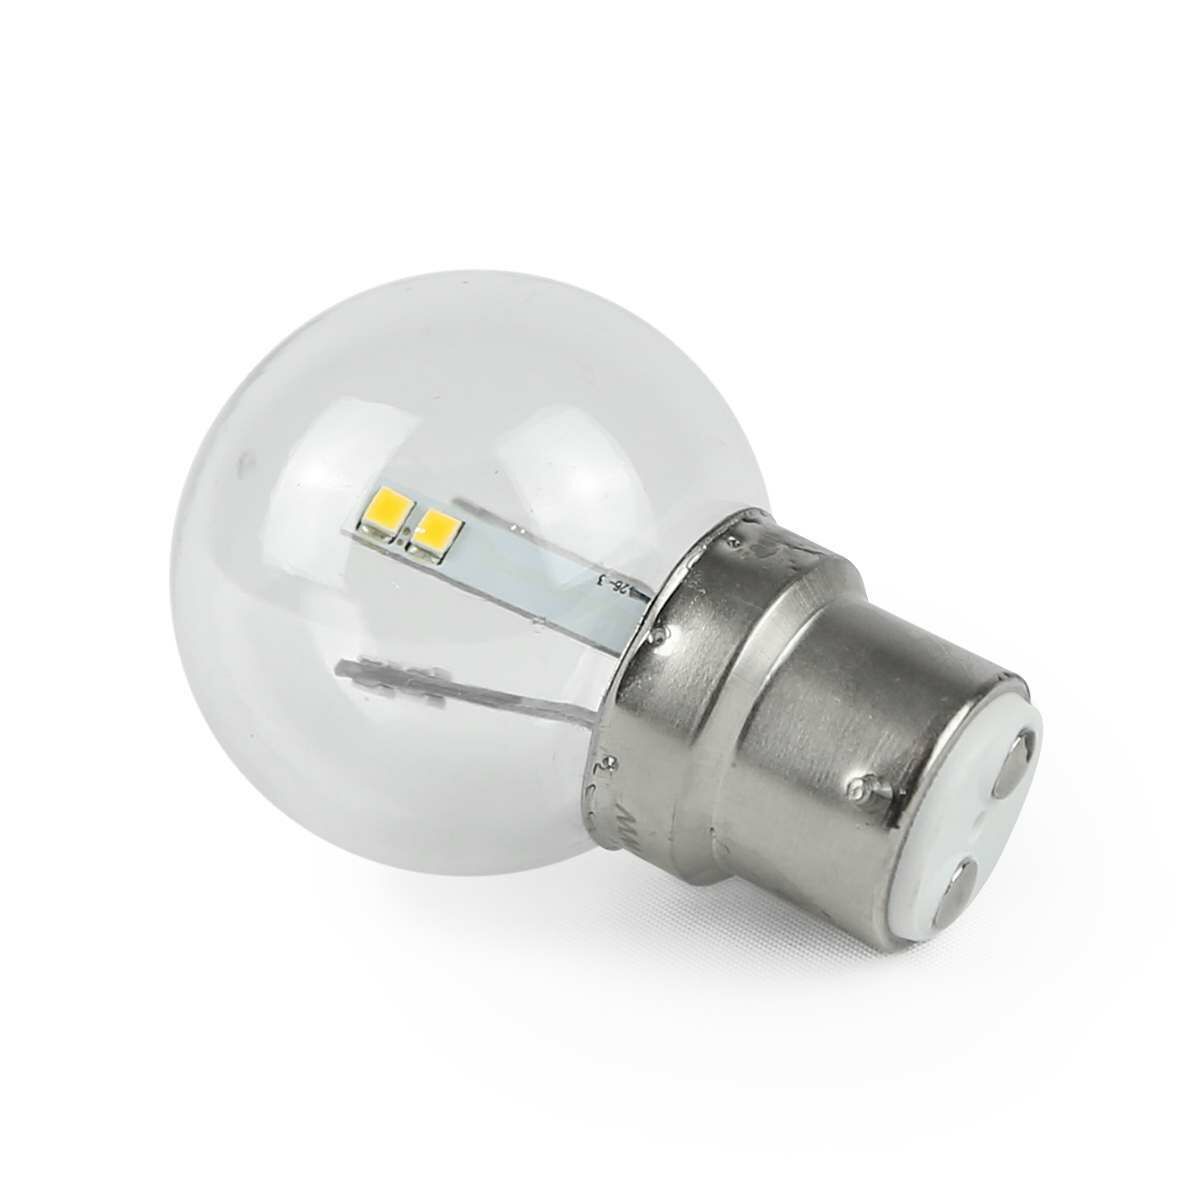 FestoonPro B22 LED High Power Festoon Bulb image 2